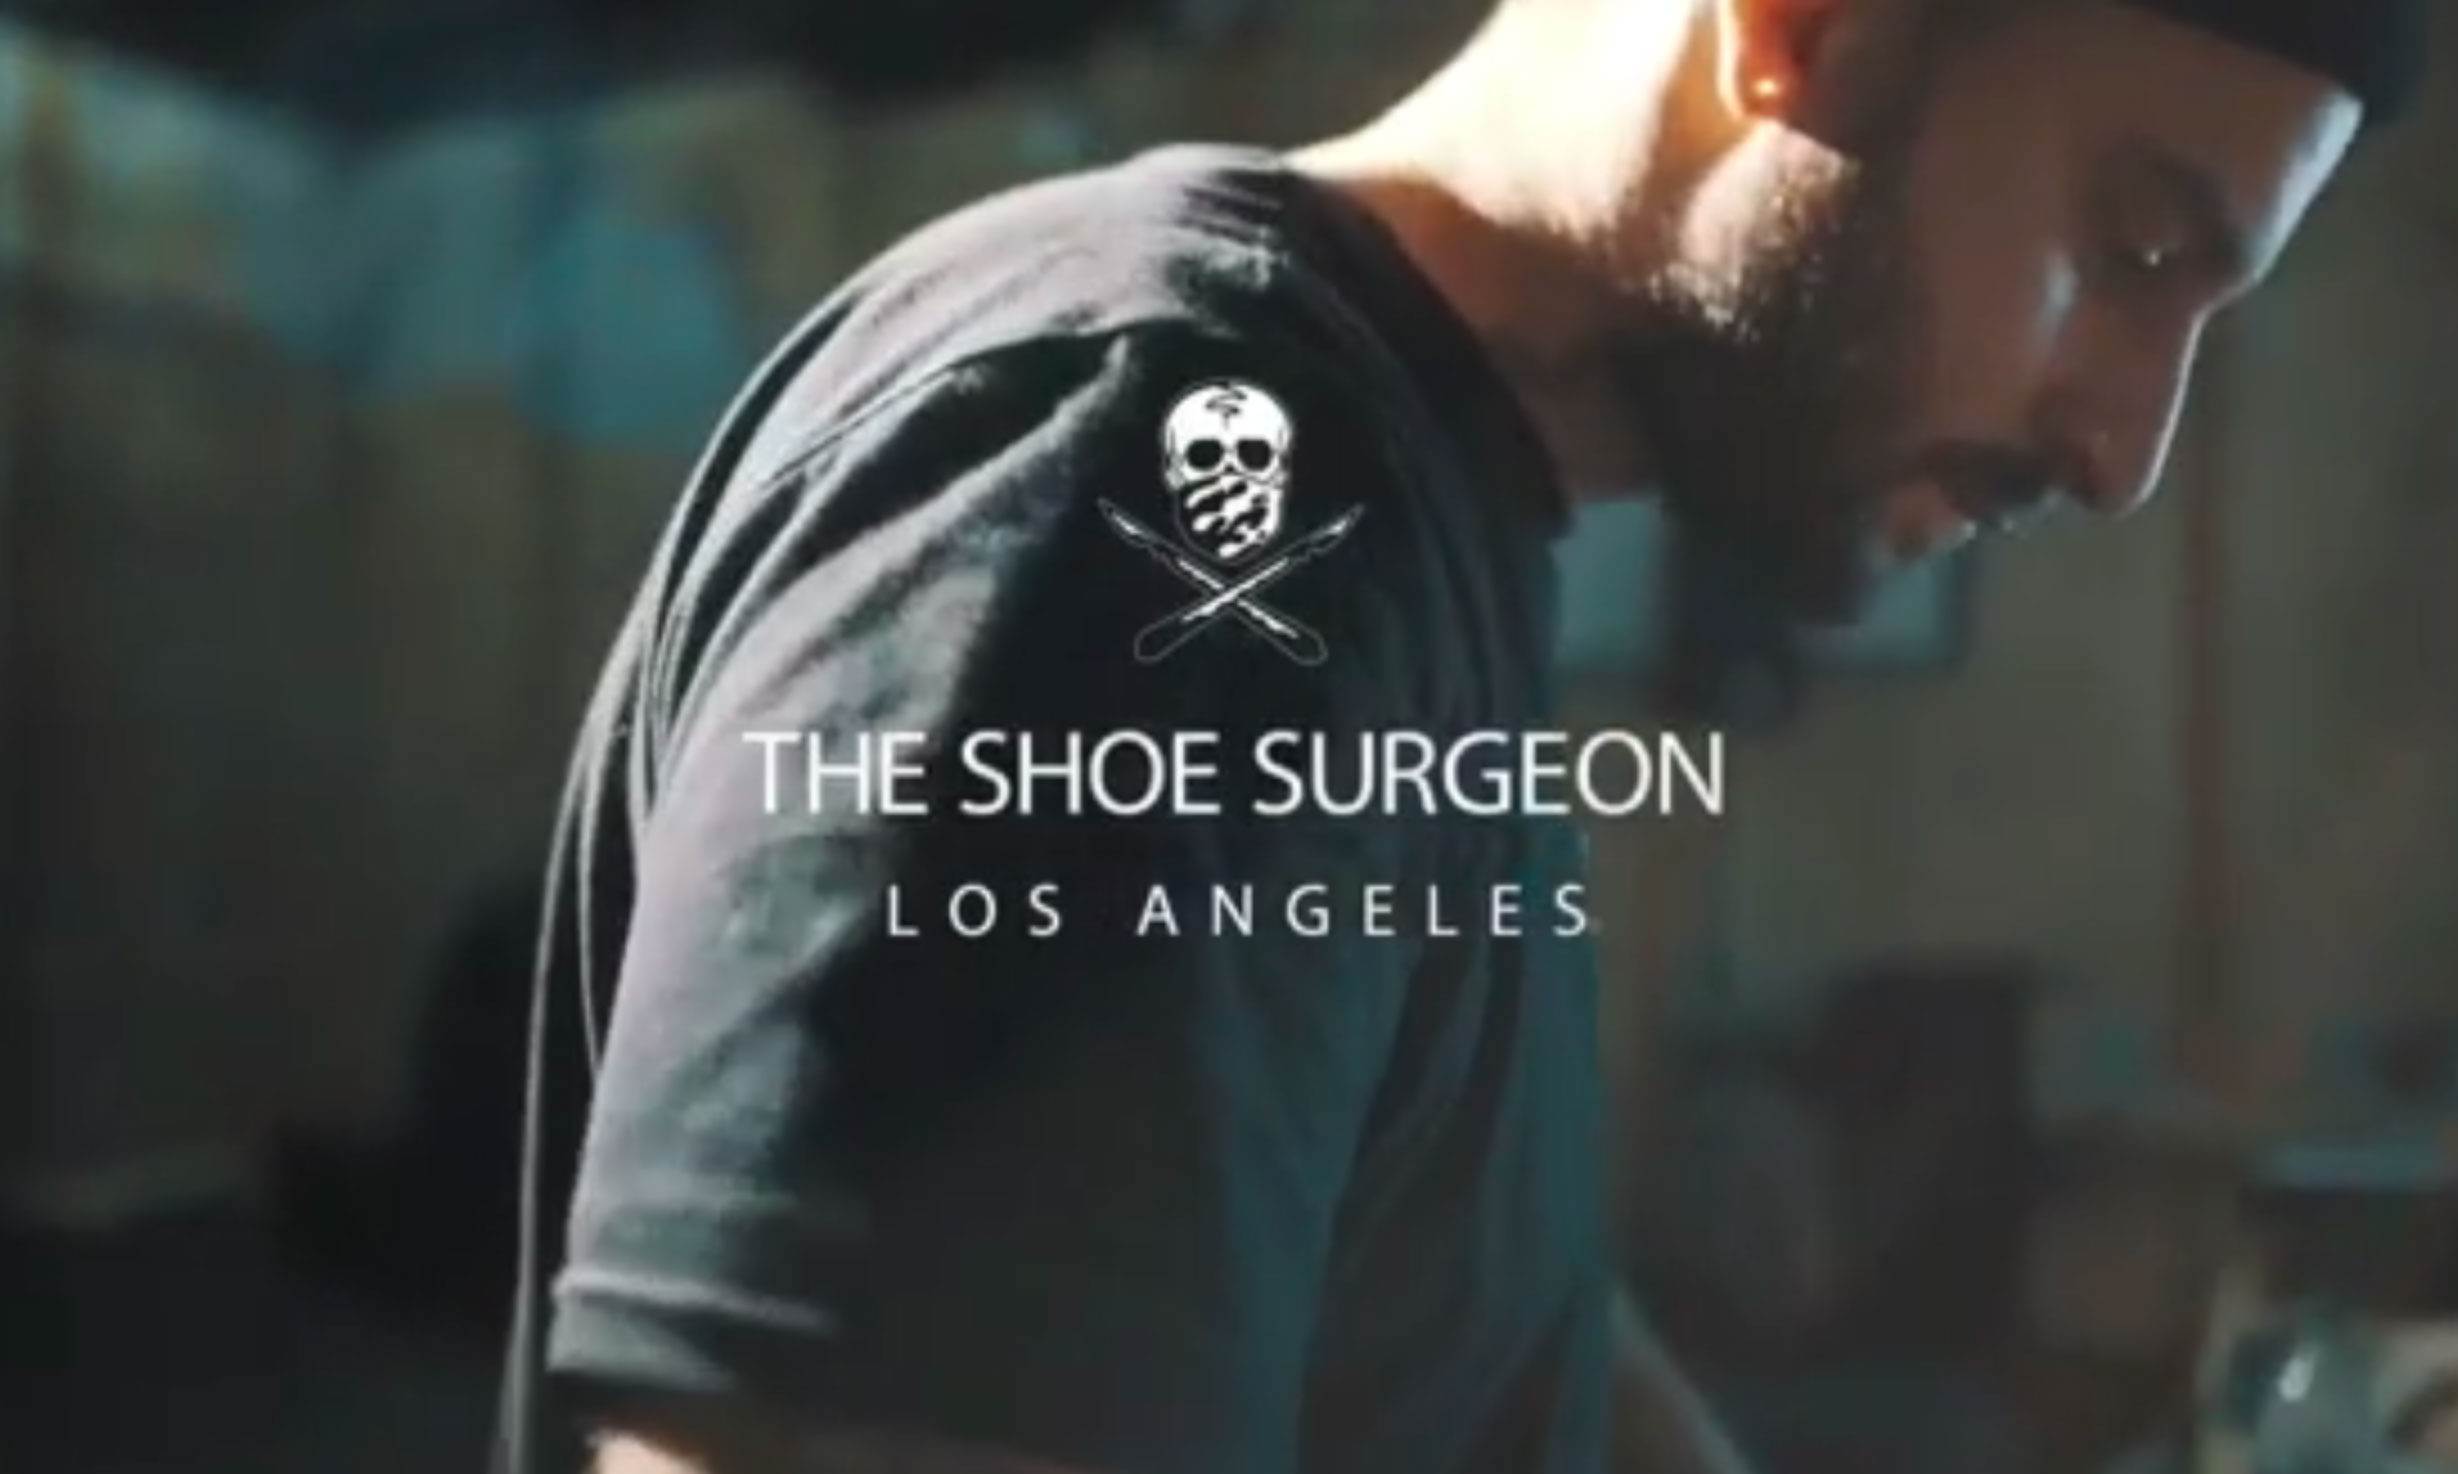 The Shoe Surgeon 球鞋定制课堂 “招生” 即将开始